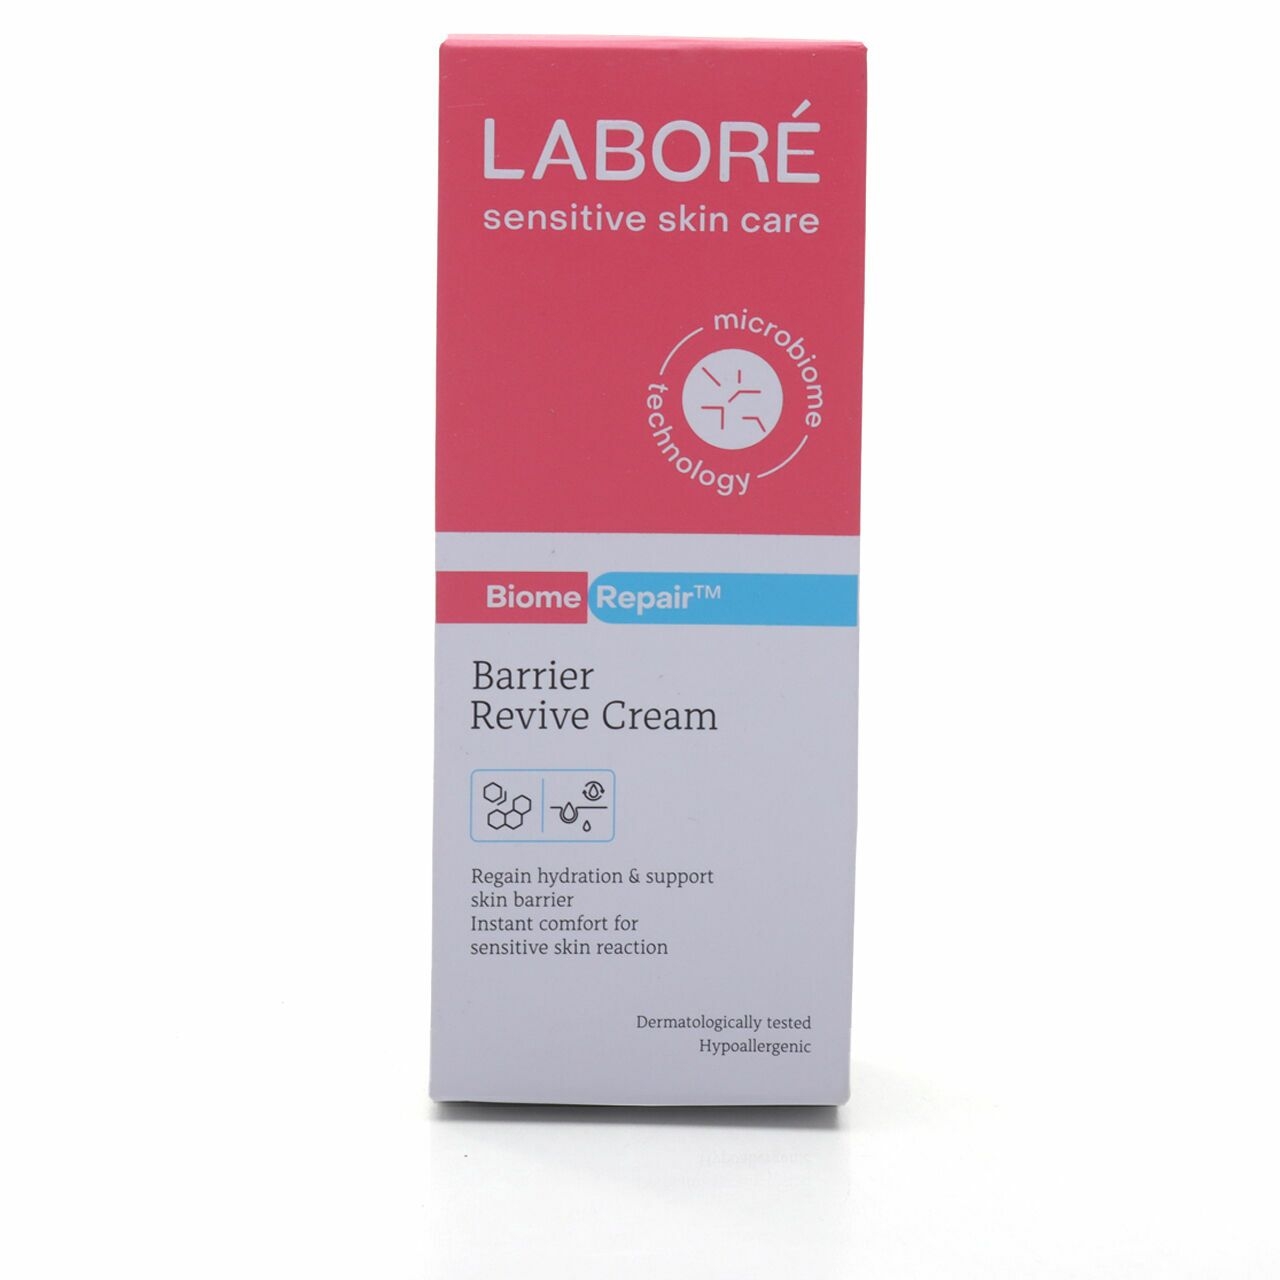 Private Collection LABORE Biome Repair Barrier Revive Cream Skin Care